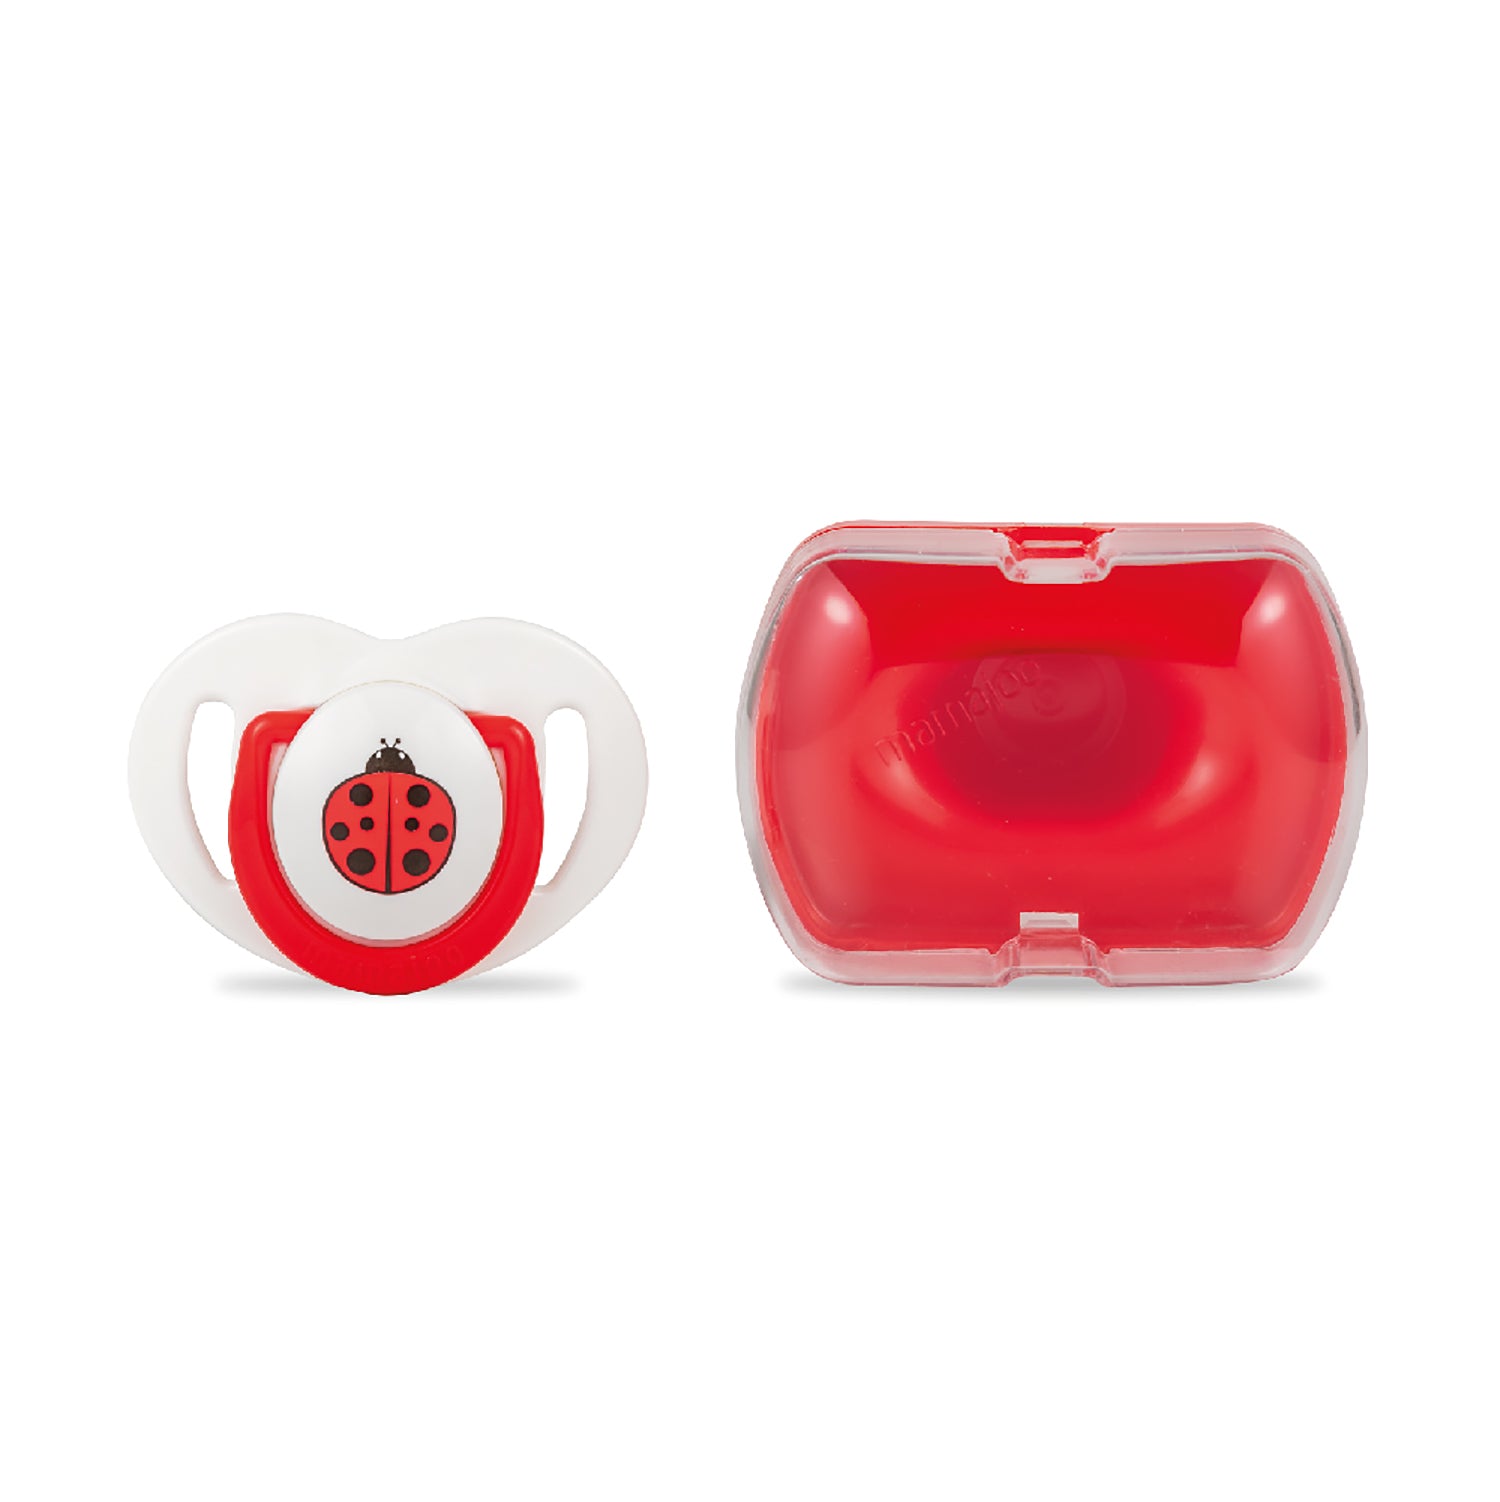 mamajoo Suzeta cu design ortodontic din silicon si cutie de depozitare, Buburuza & cutie rosie 6m+, 1 buc